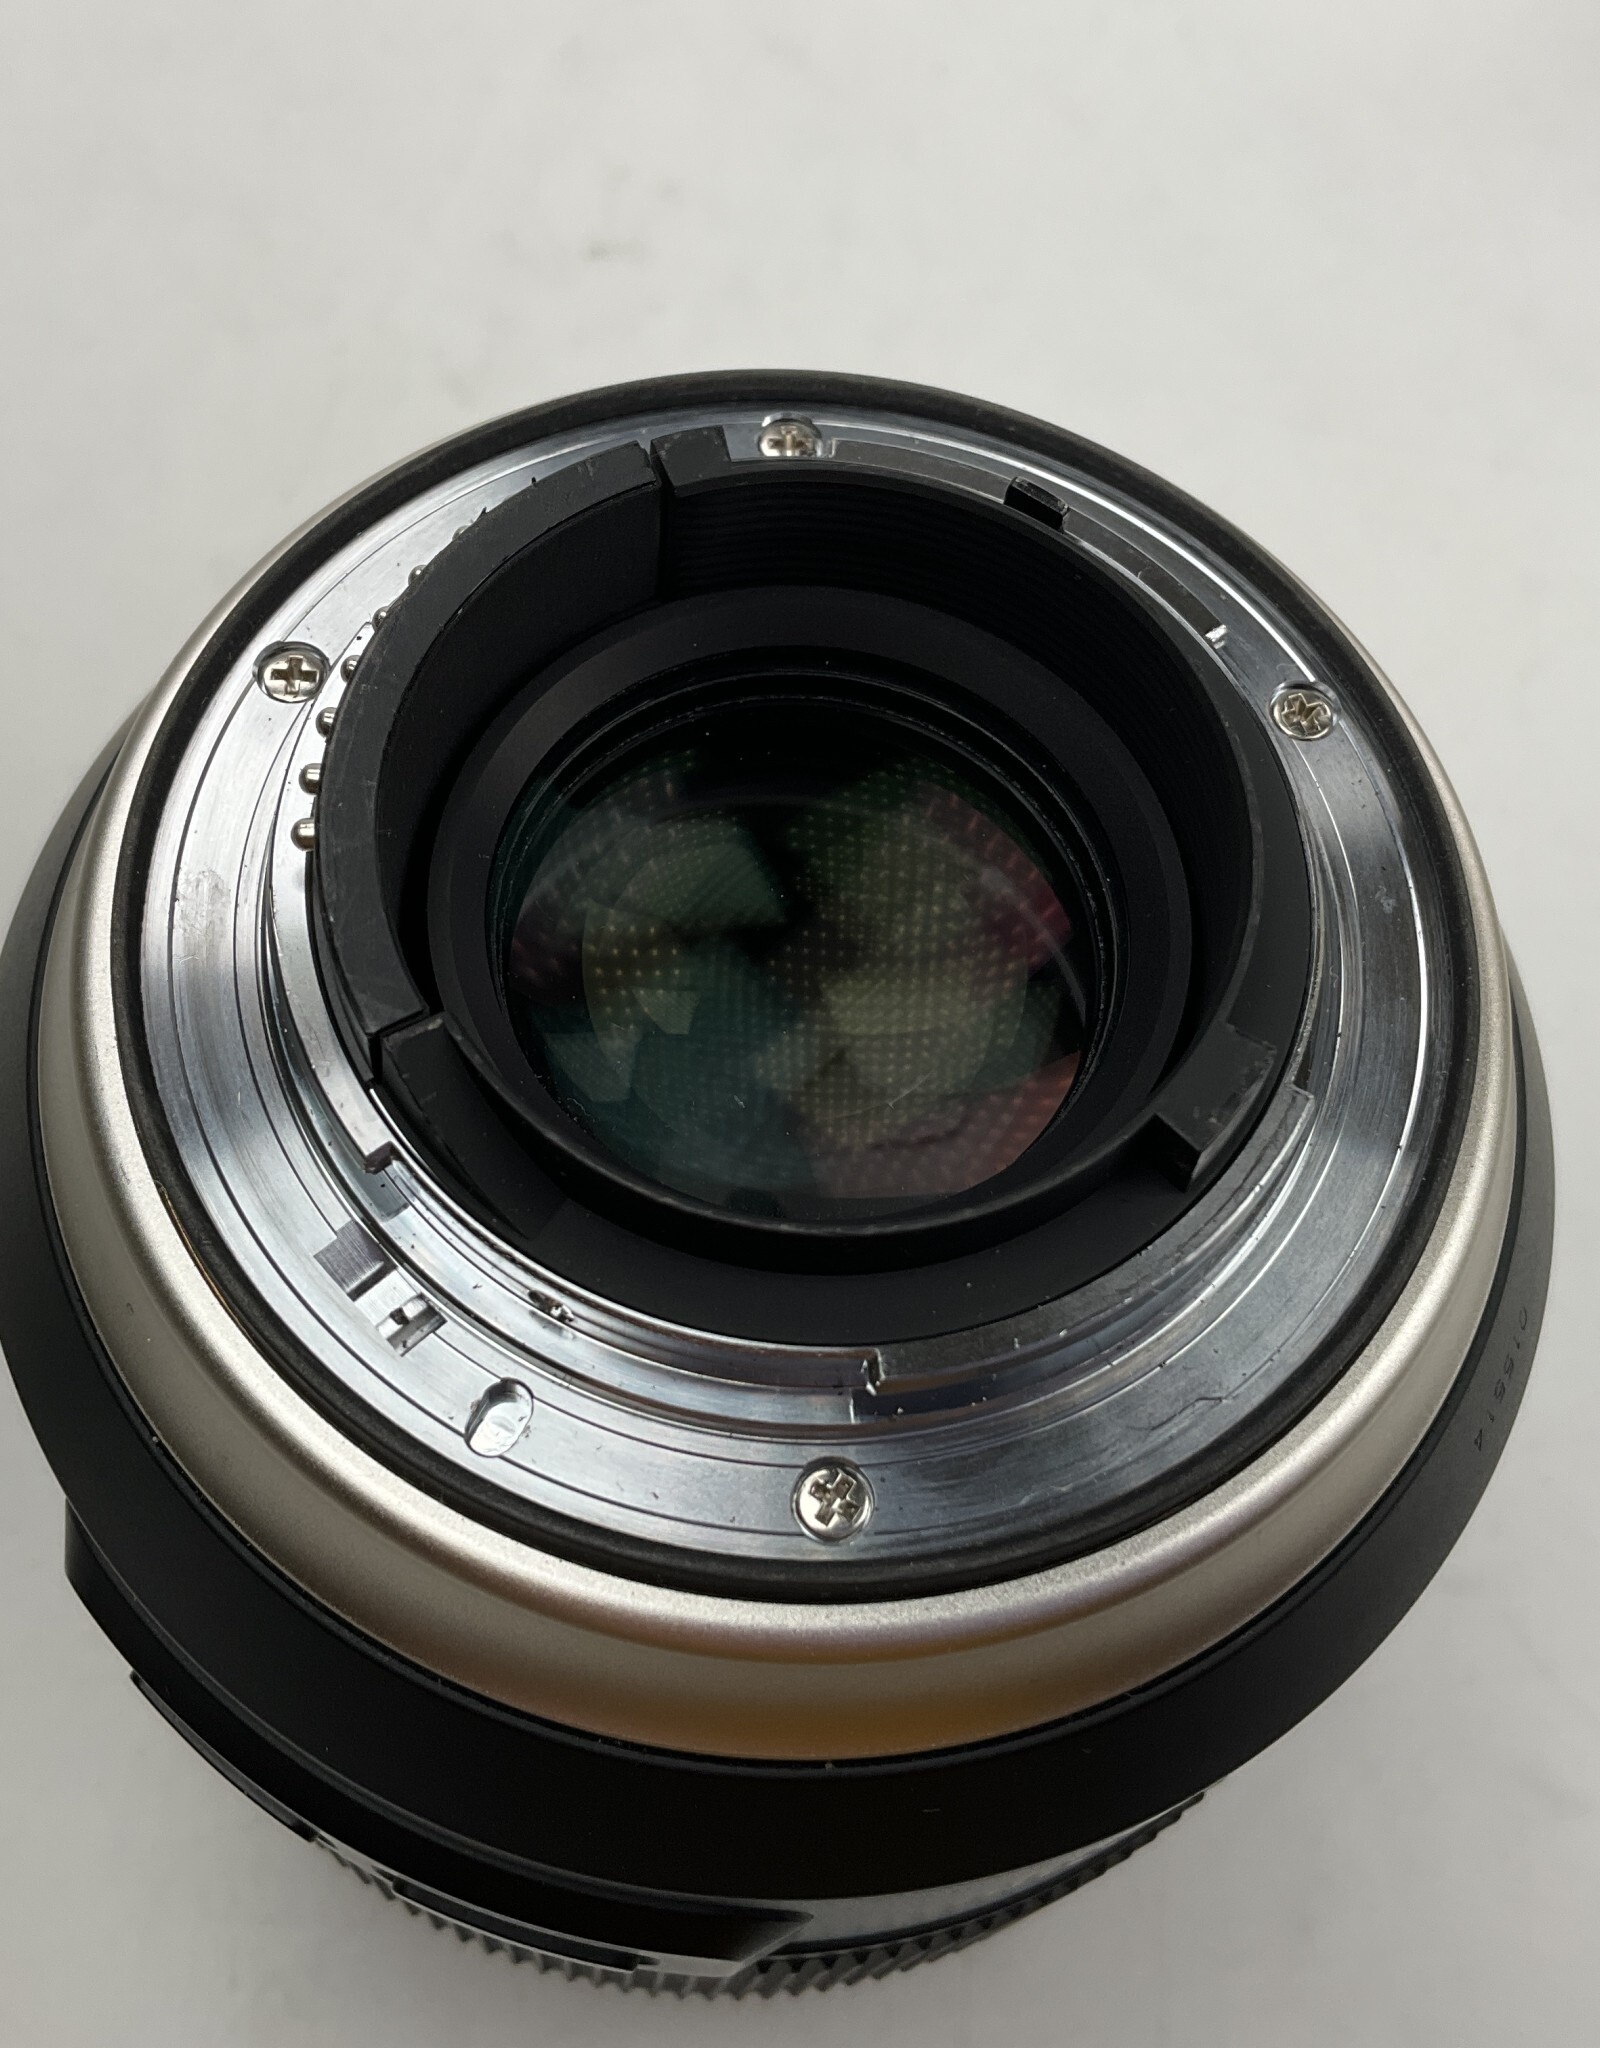 TAMRON Tamron SP 35mm f1.8 Di VC USD Lens for Nikon Used Good